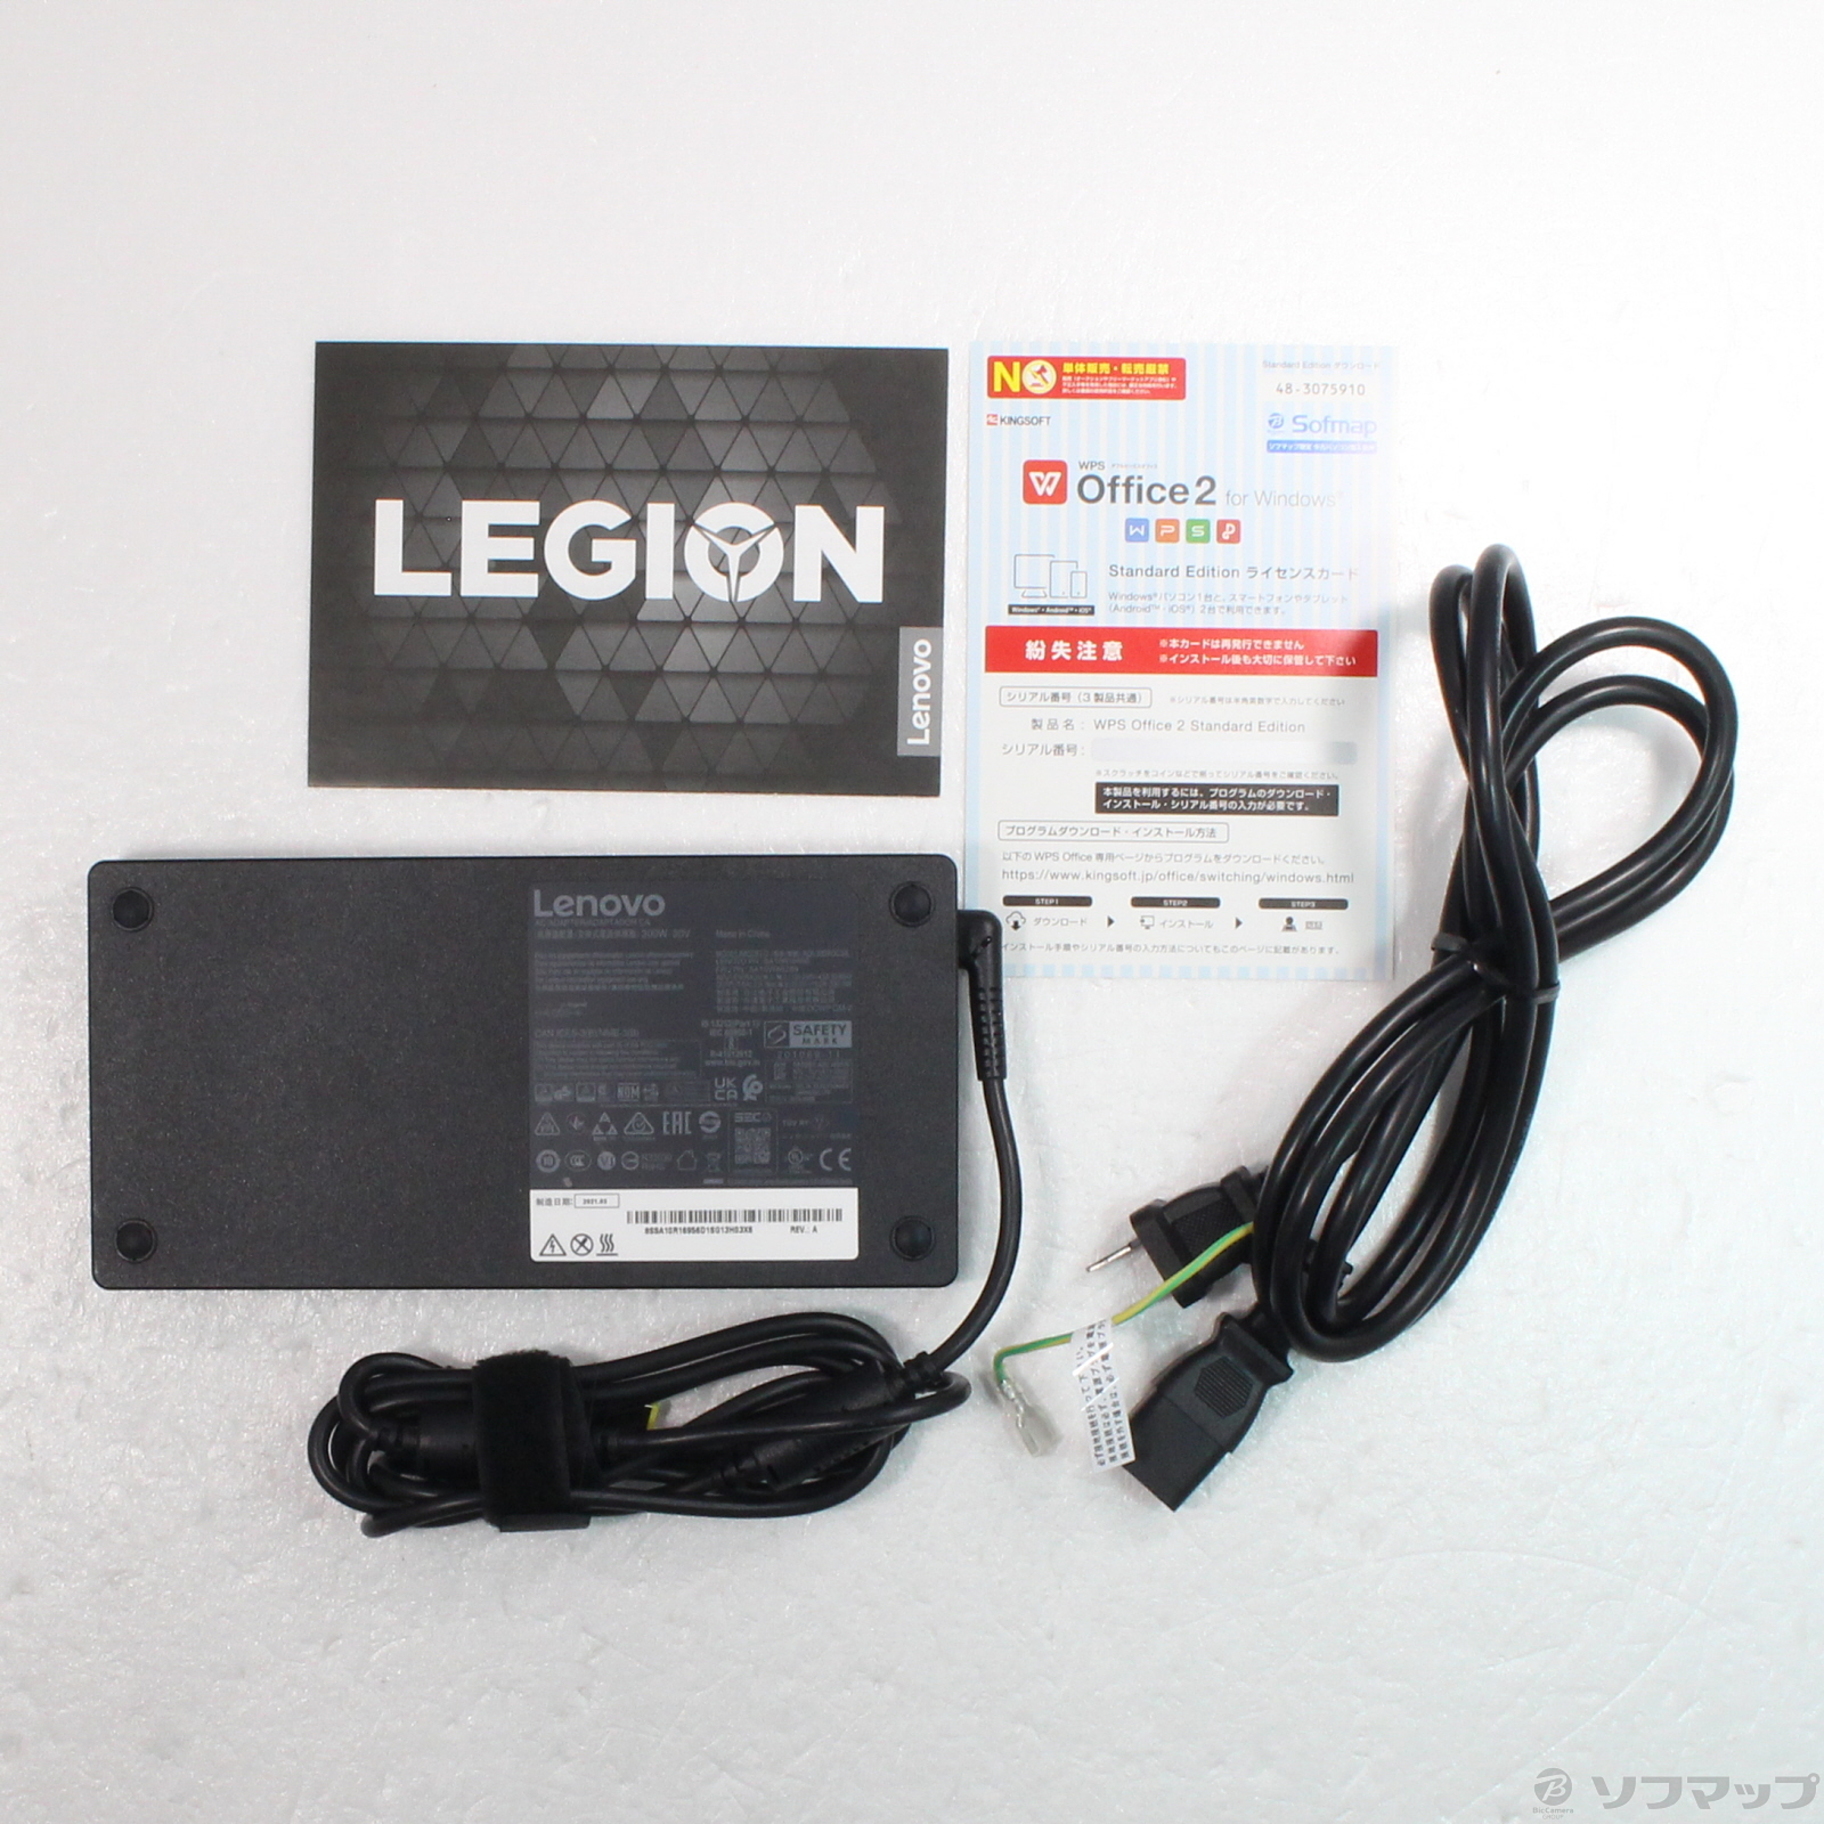 Legion 560 Pro 82JQ005QJP ストームグレー 〔Windows 10〕